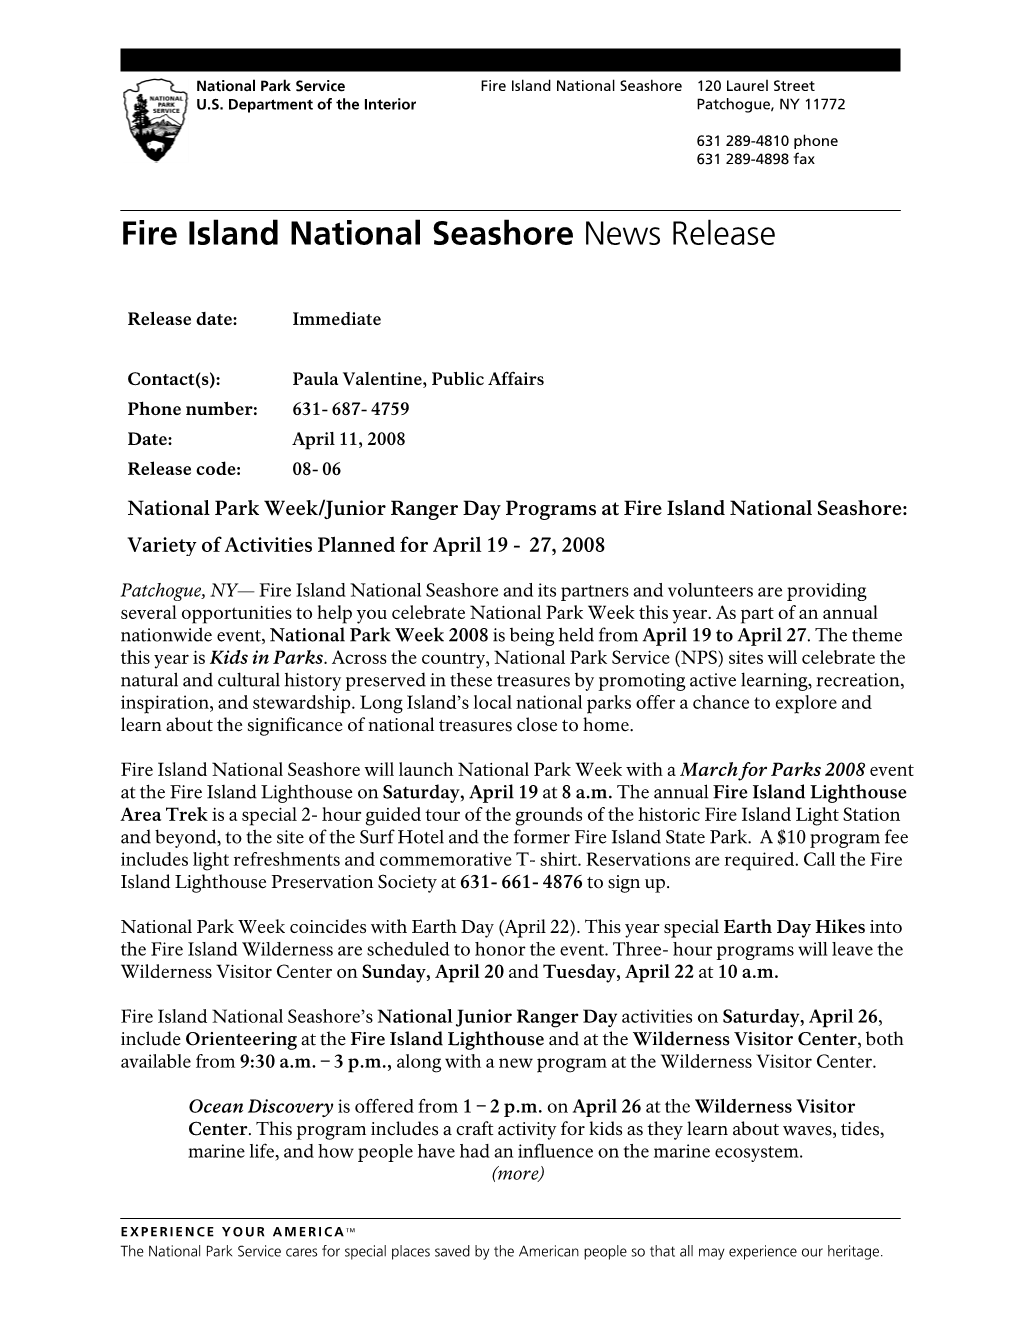 Fire Island National Seashore News Release